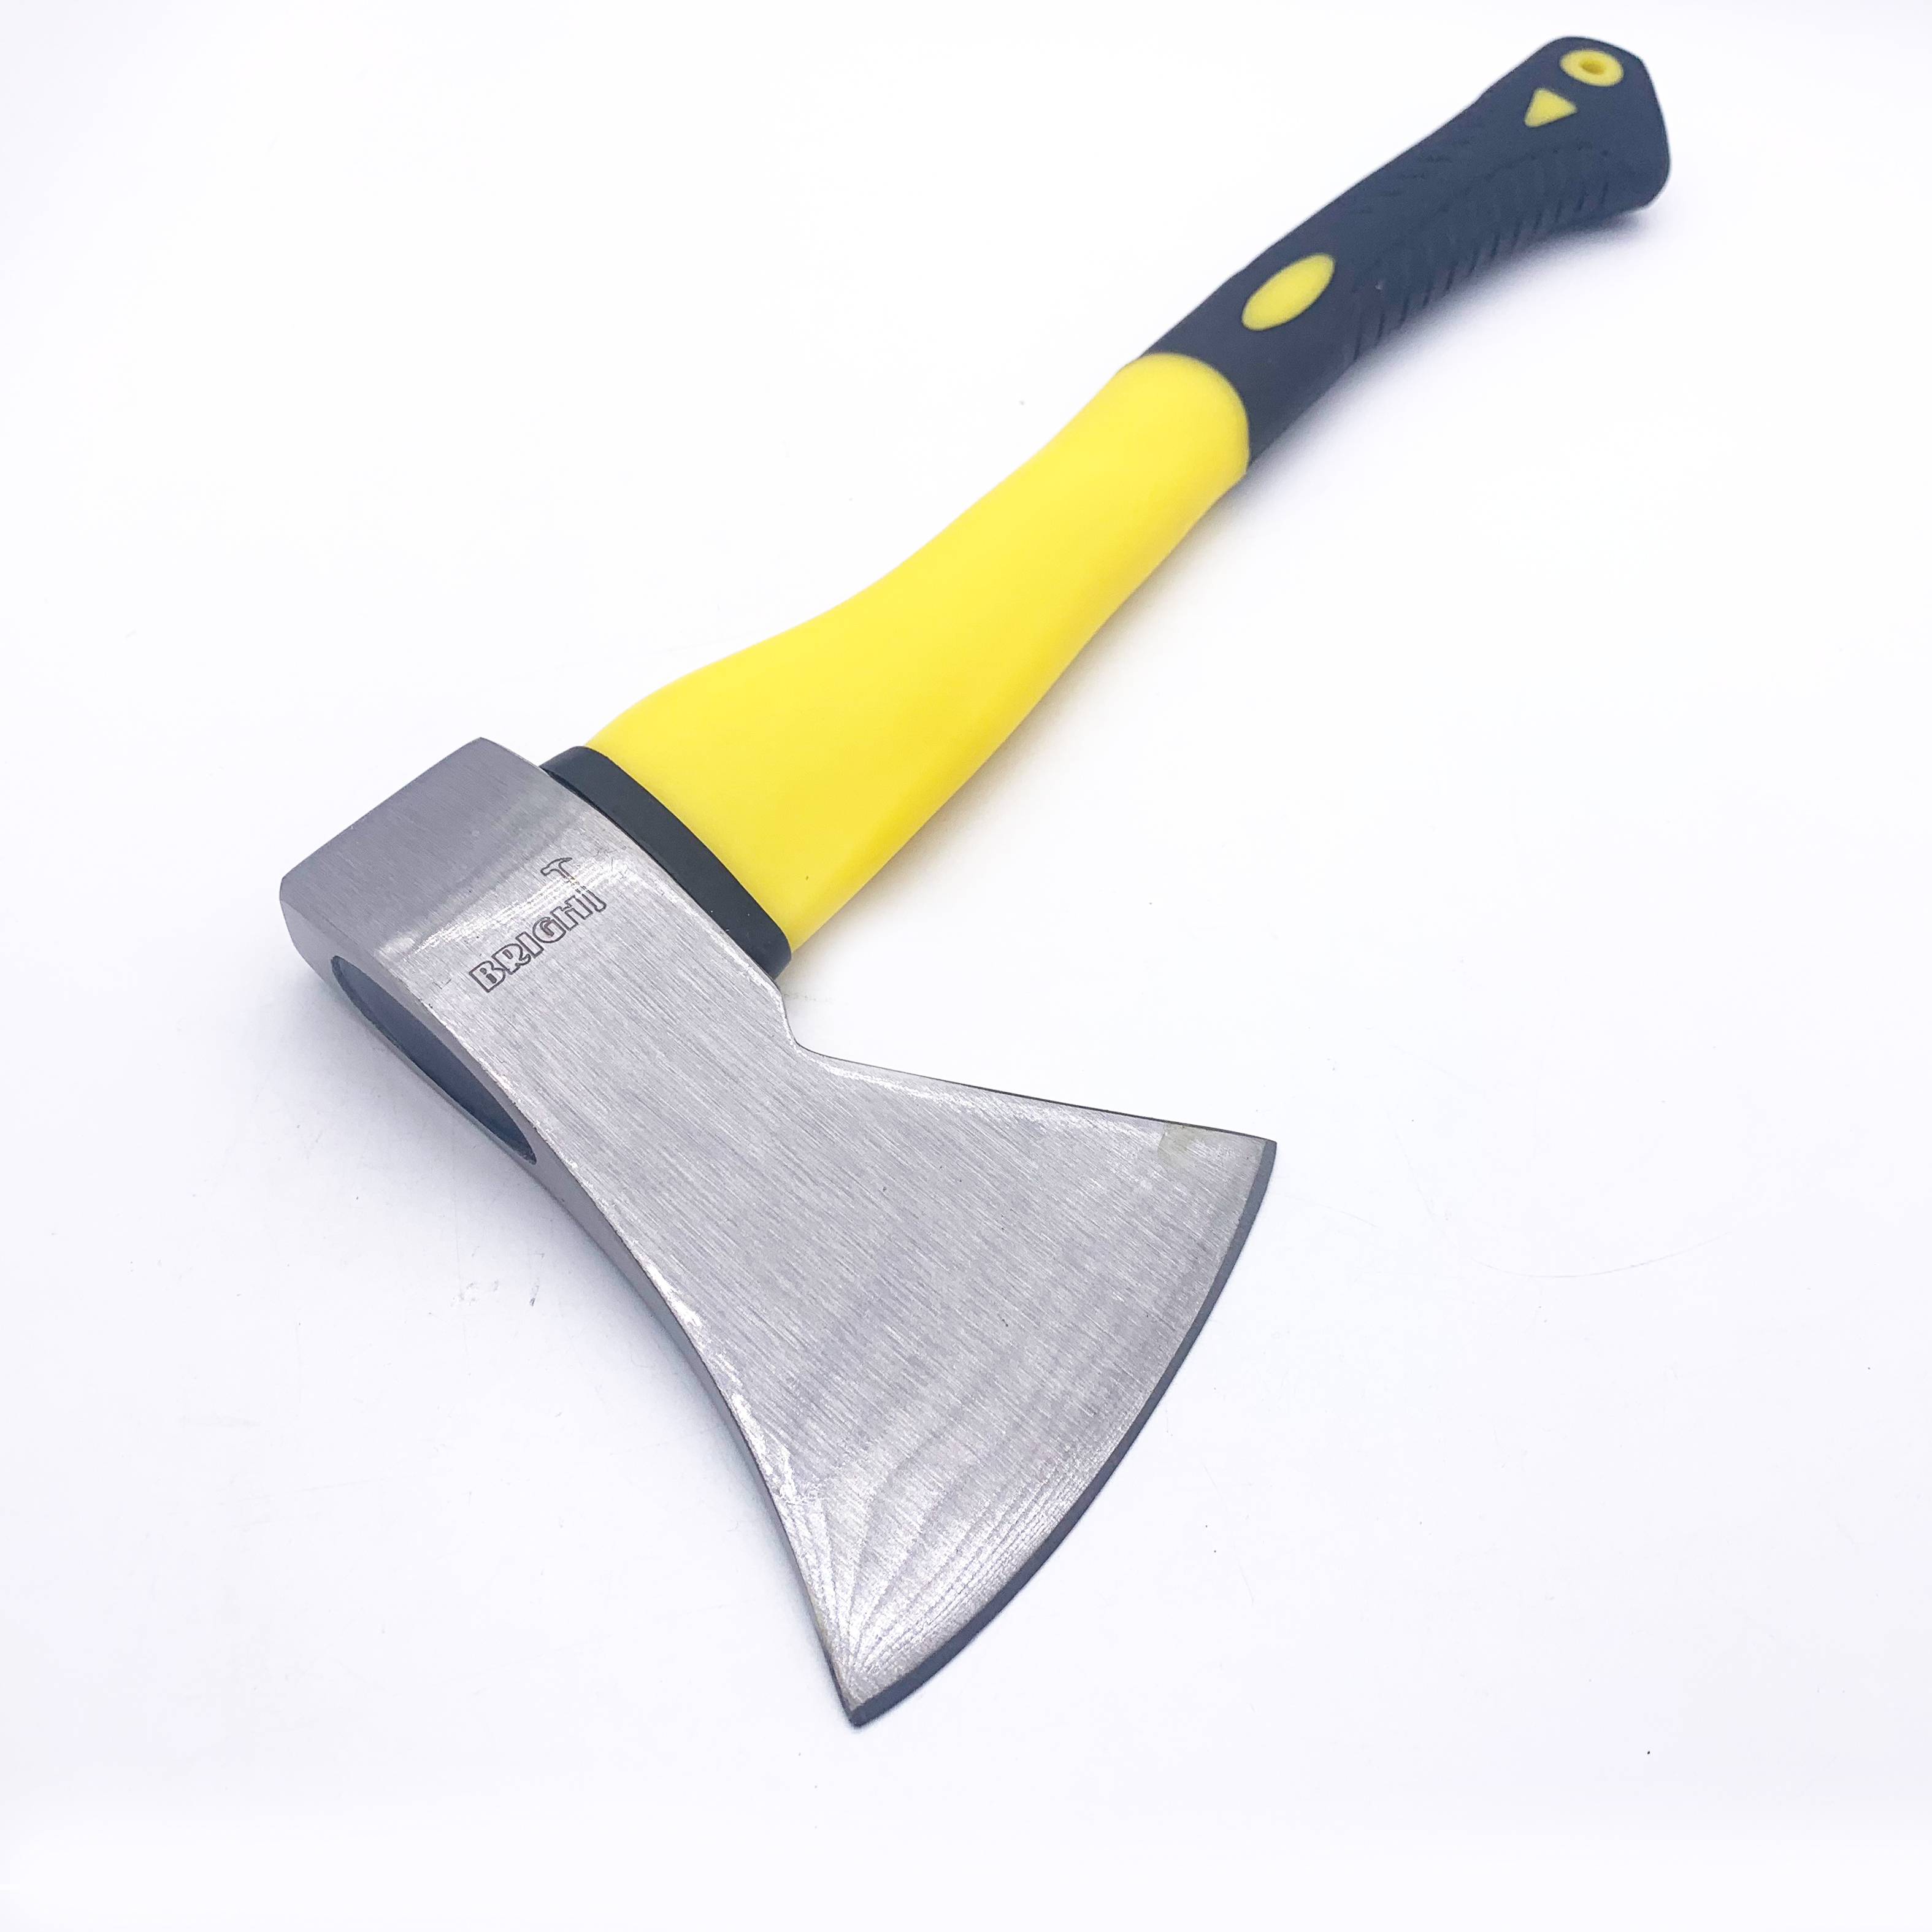 613 axe with fiberglass handle